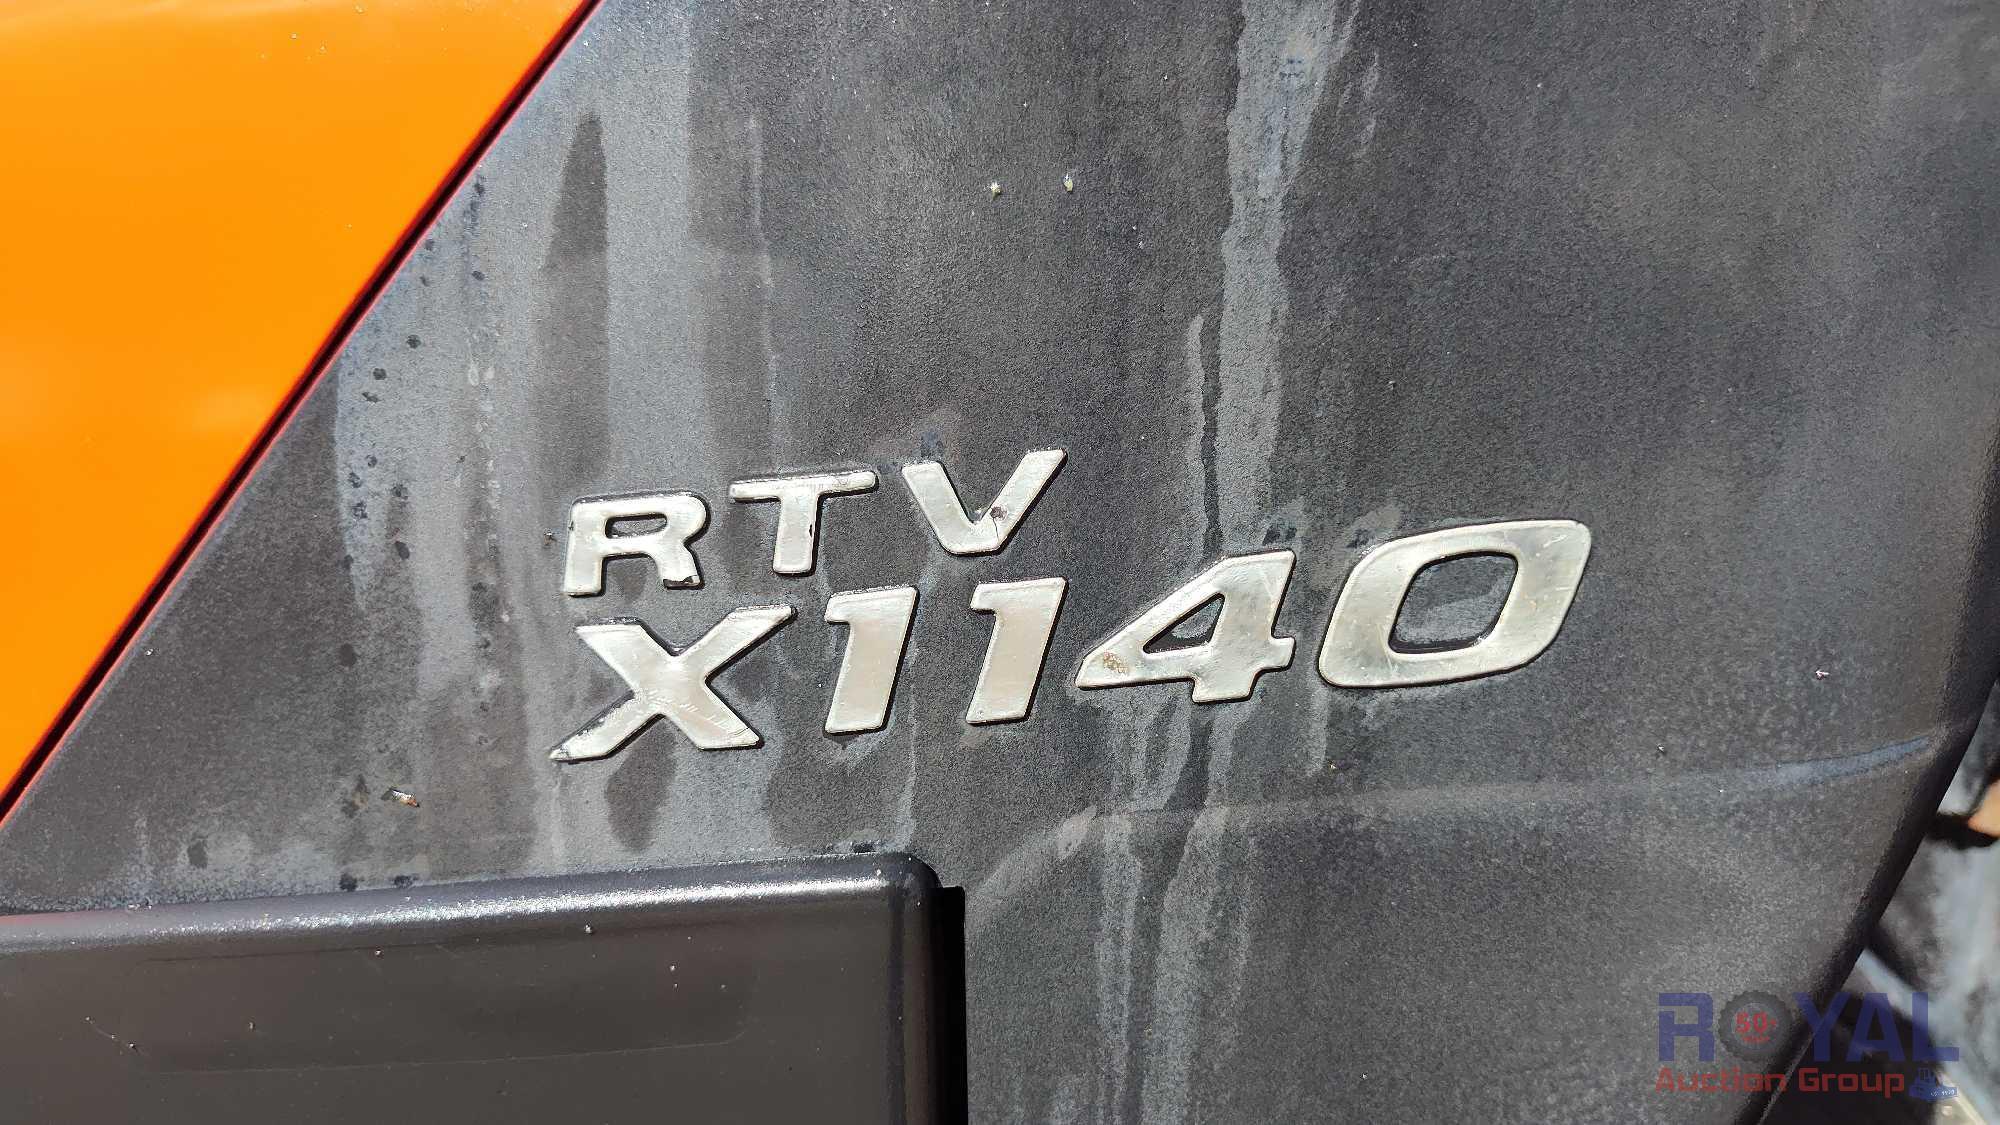 Kubota 4 Seat RTV X1140 4X4